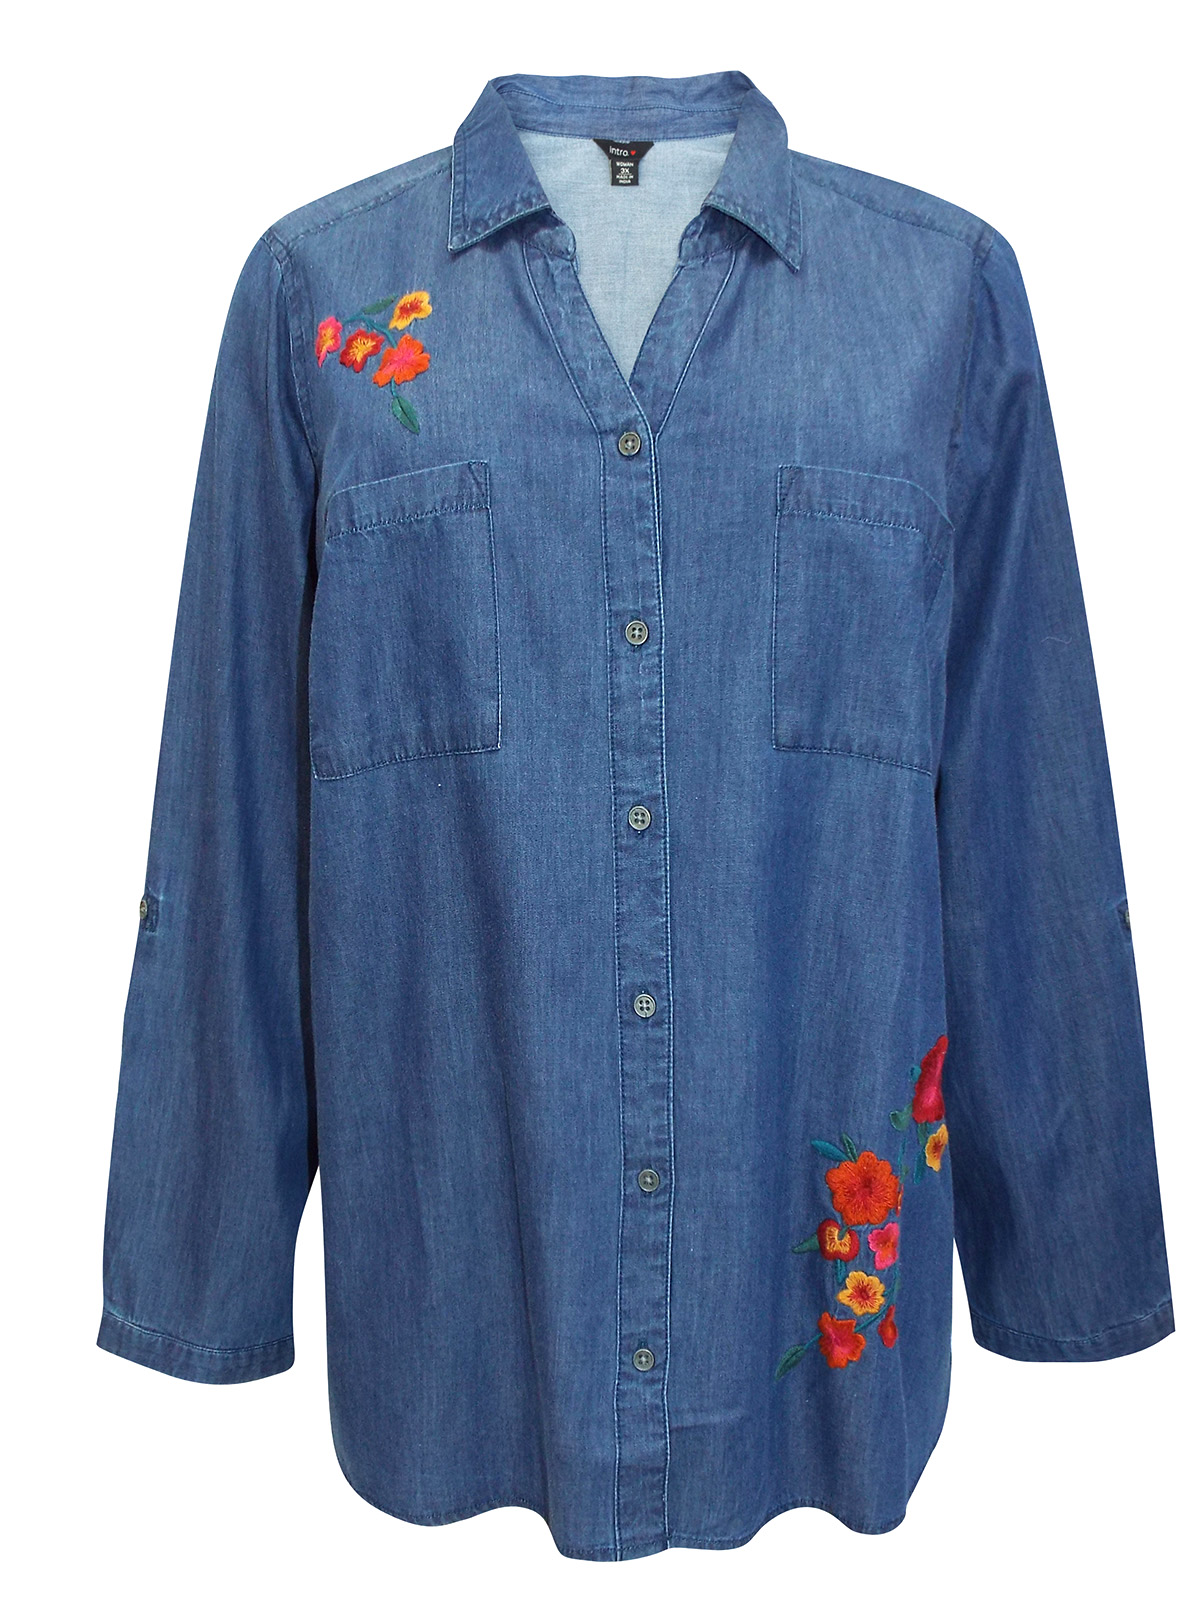 Intro Intro Blue Denim Floral Embroidered Dipped Hem Denim Shirt